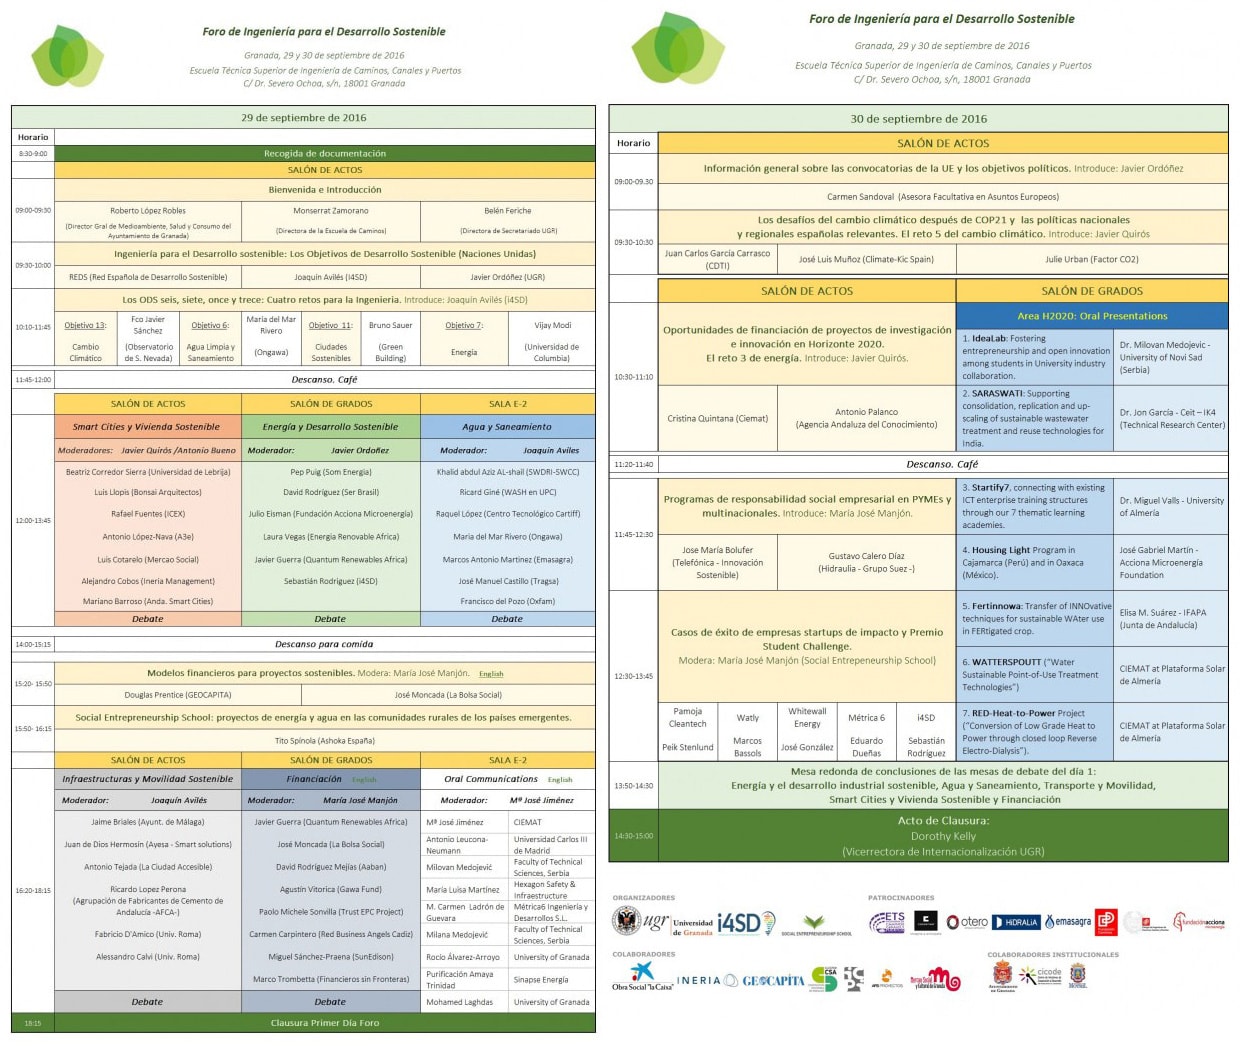 Program of the Forum for Sustainable Development